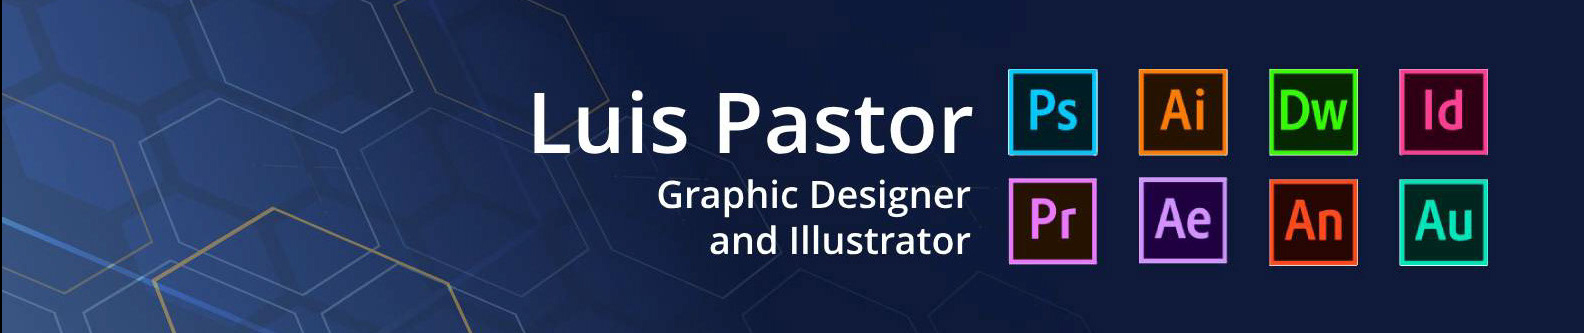 Luis Pastor's profile banner